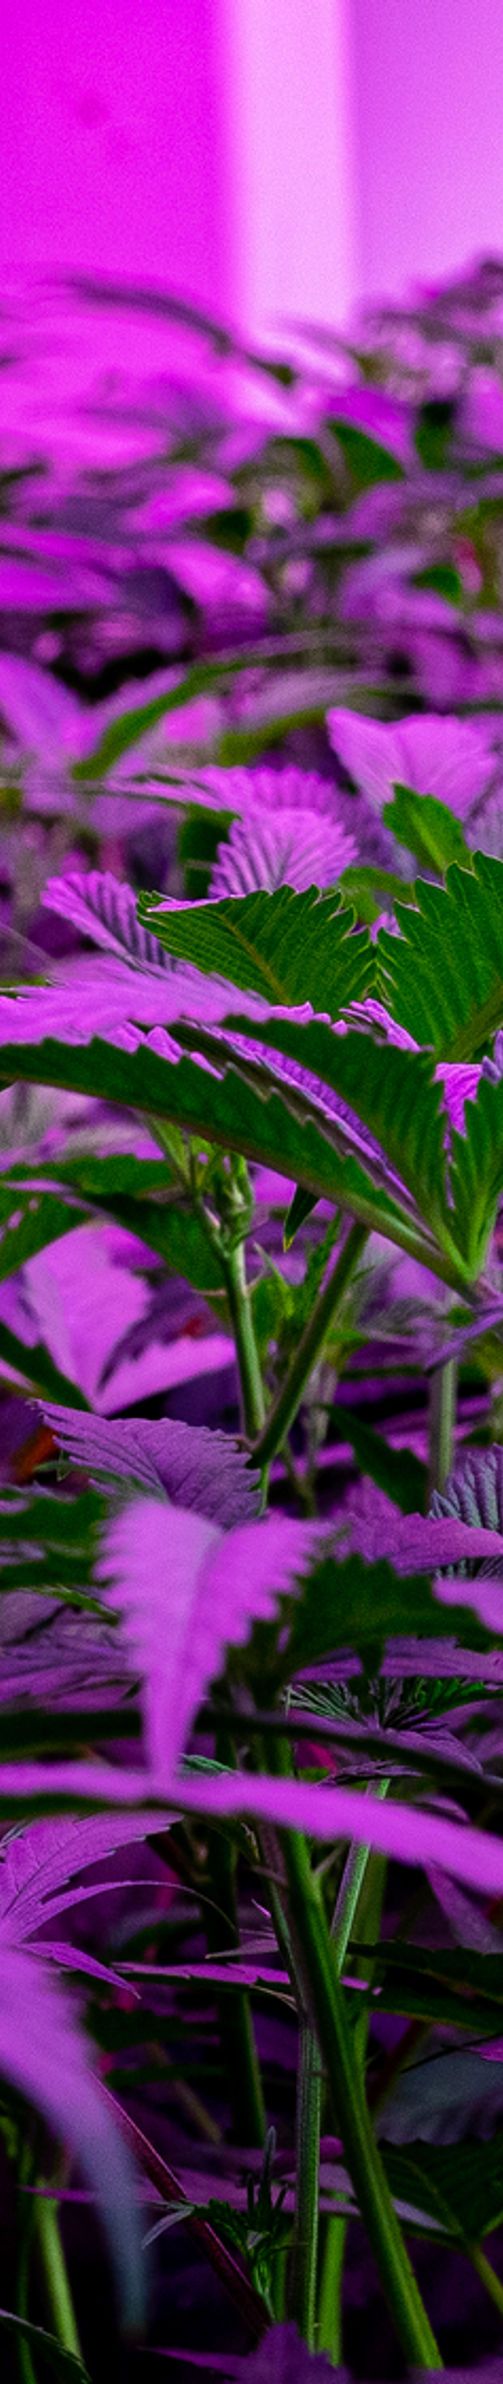 Cannabis Cultivation. beWell Organic Medicine, Inc